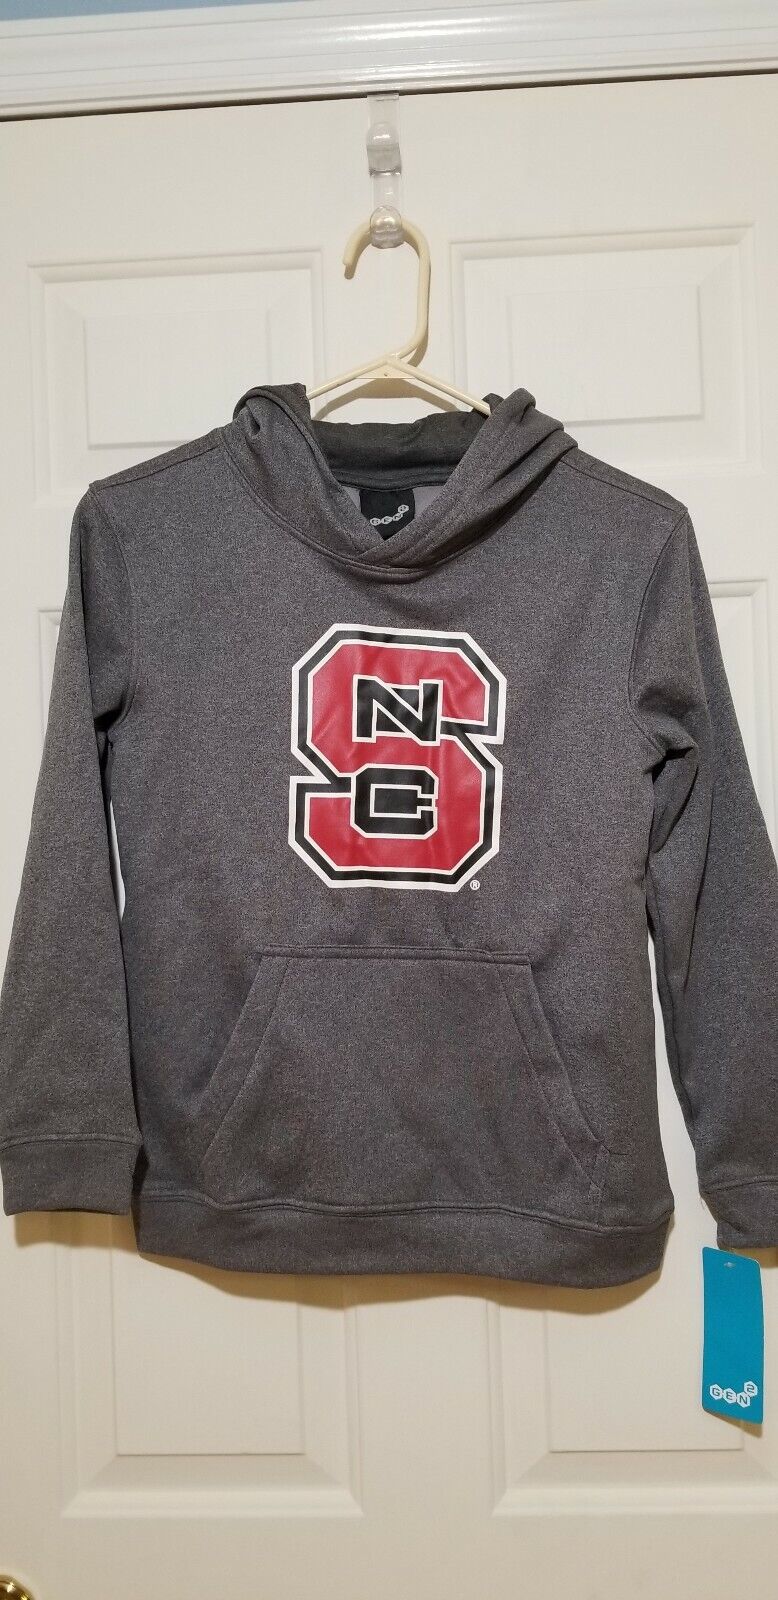 North Carolina State Wolfpack Youth Medium (10-12) Hooded Sweatshirt. NWOT.